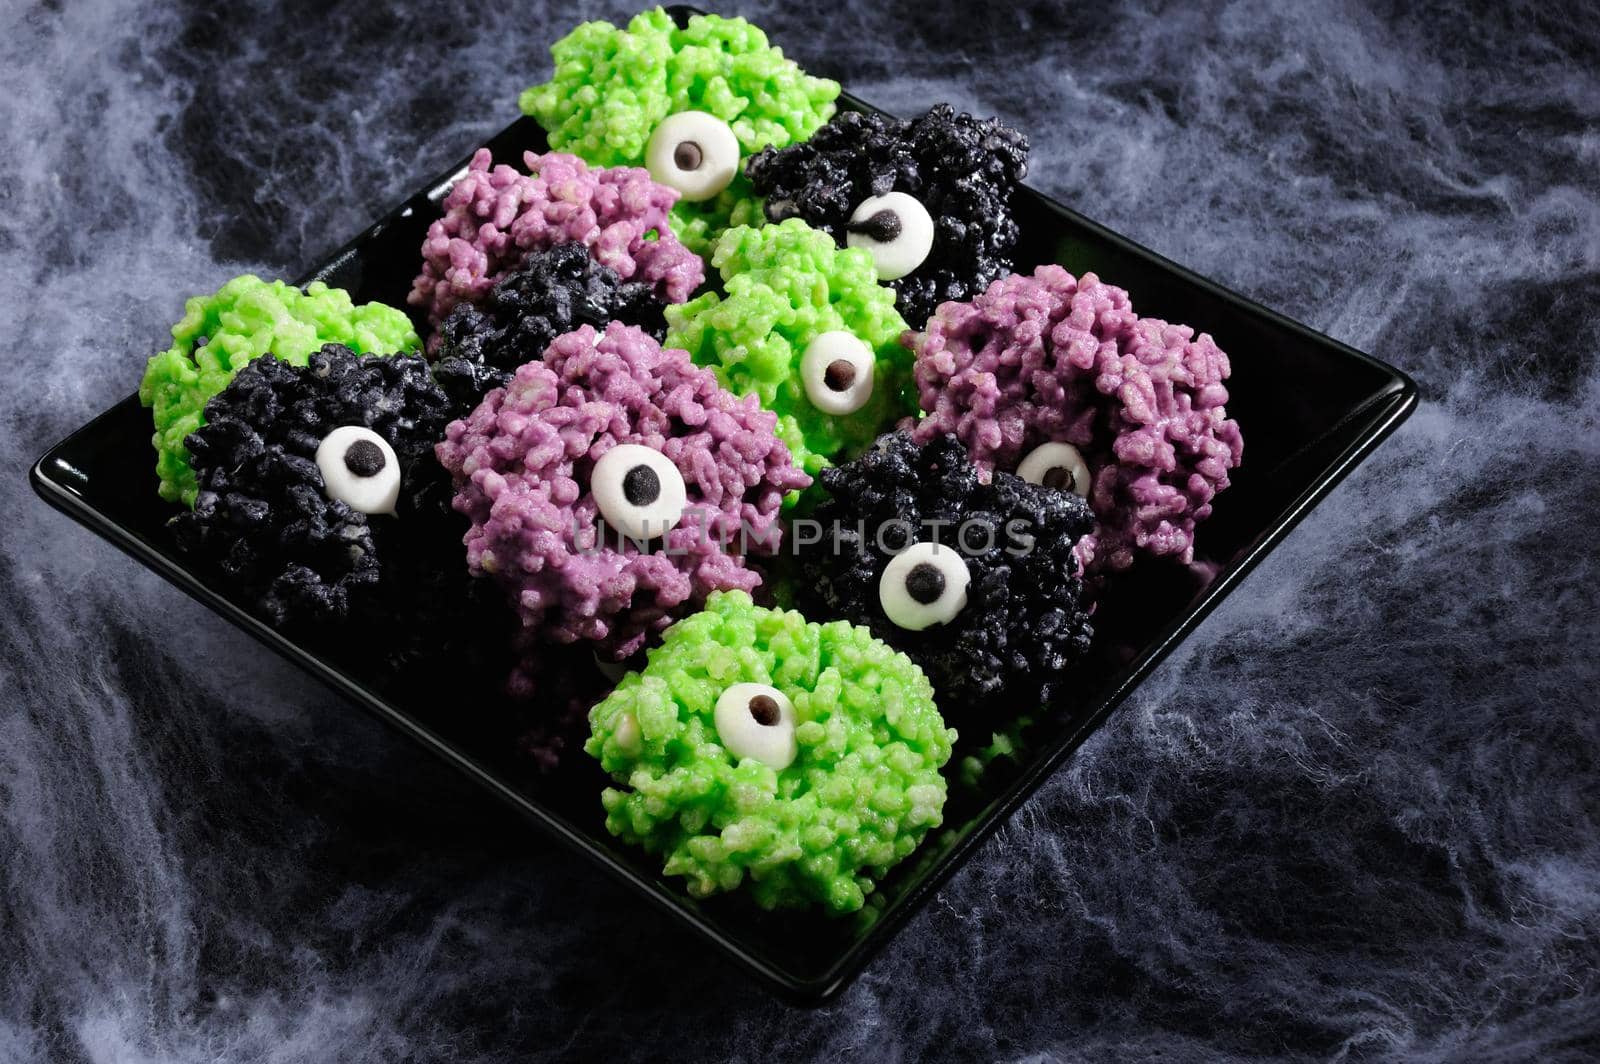 Monsters eye balls. Rice krispies bites by Apolonia